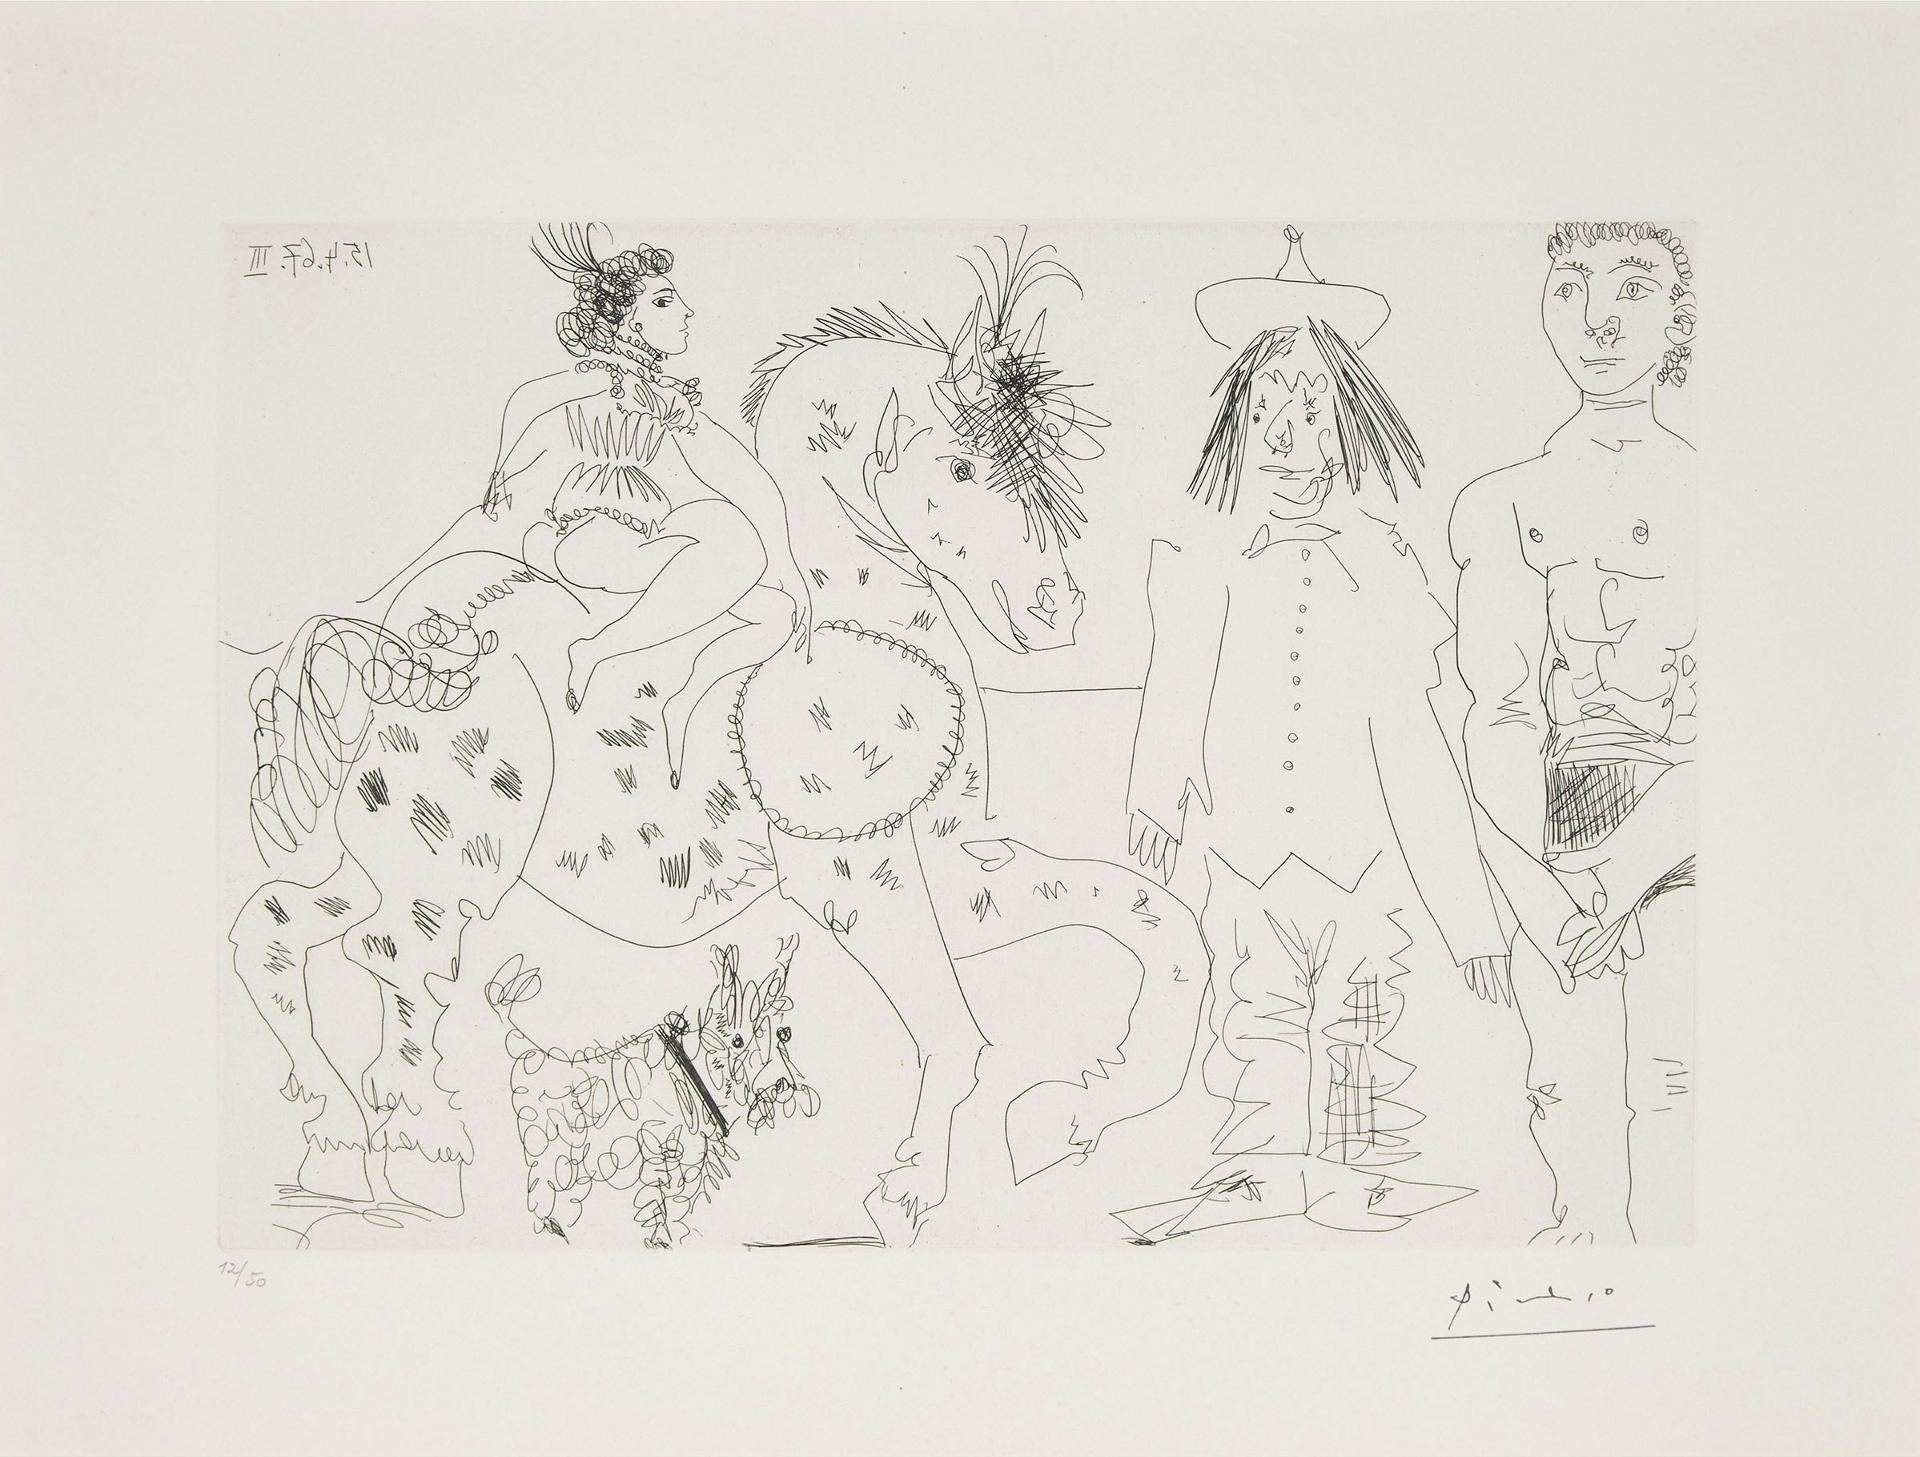 Pablo Ruiz Picasso (1881-1973) - AU CIRQUE L'ECUYERE BRUNE, 1967 [B. 1452; BA. 1488]